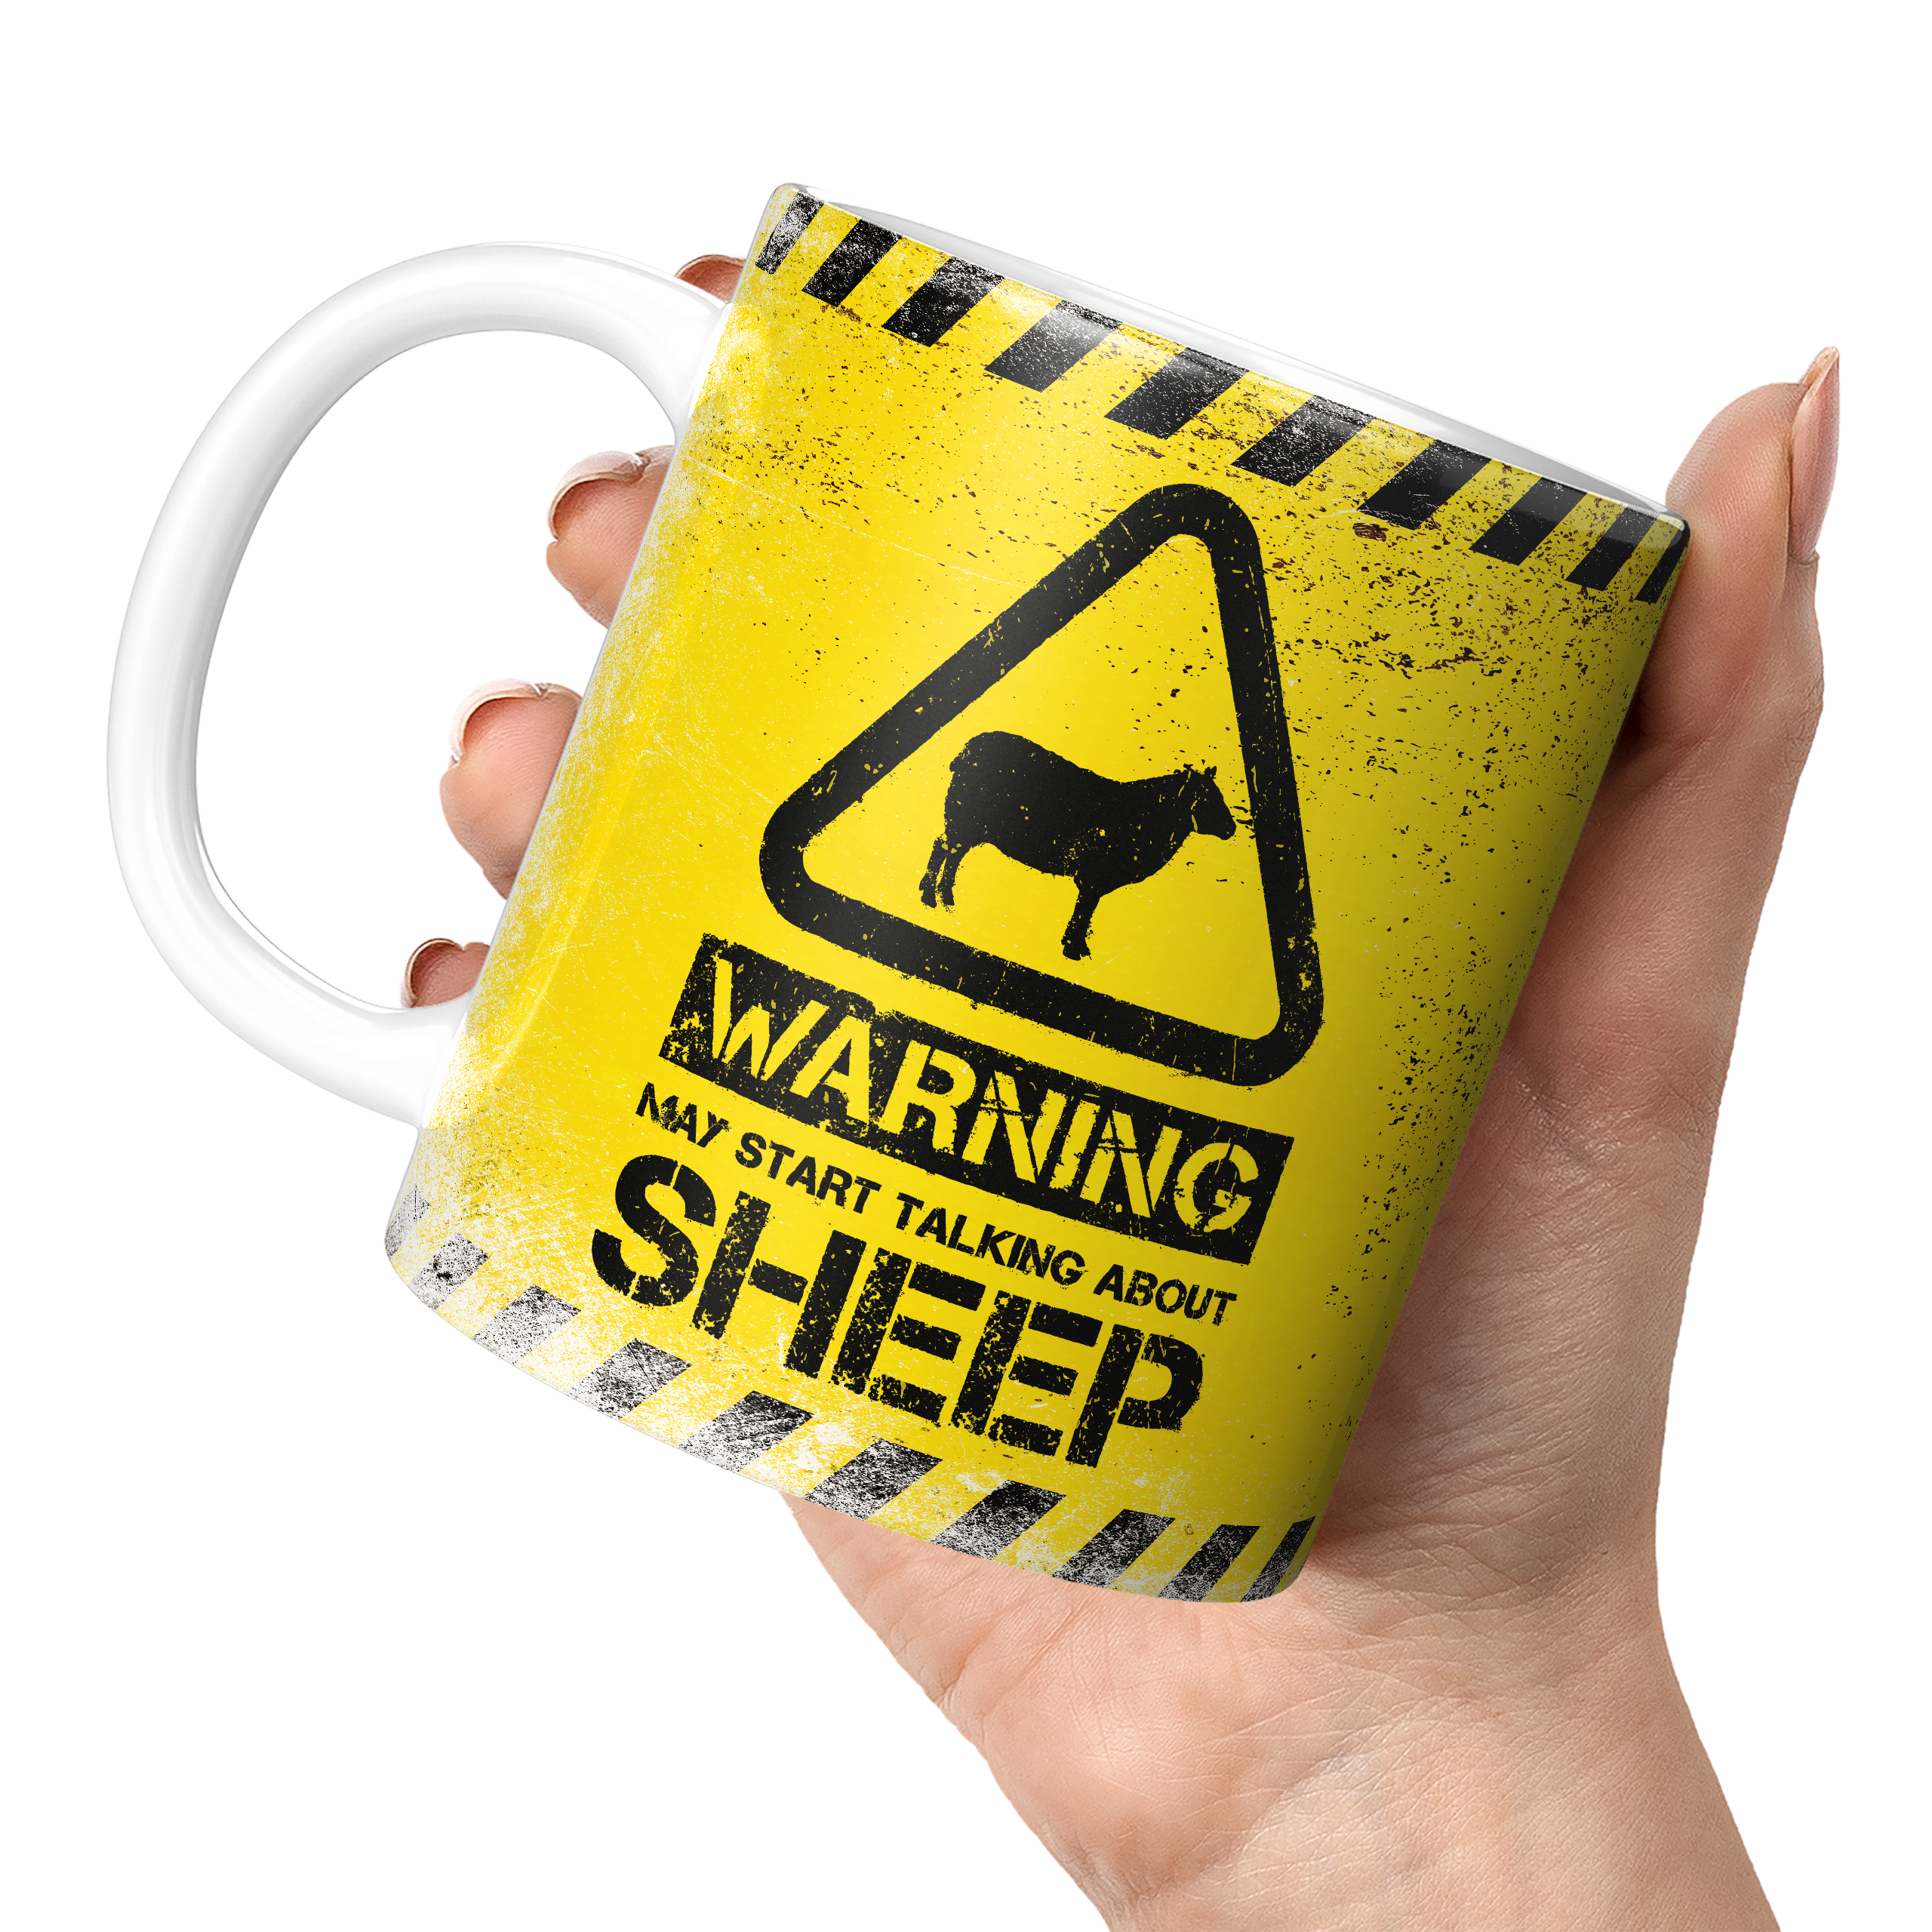 WARNING MAY START TALKING ABOUT SHEEP 11oz NOVELTY MUG Mugs